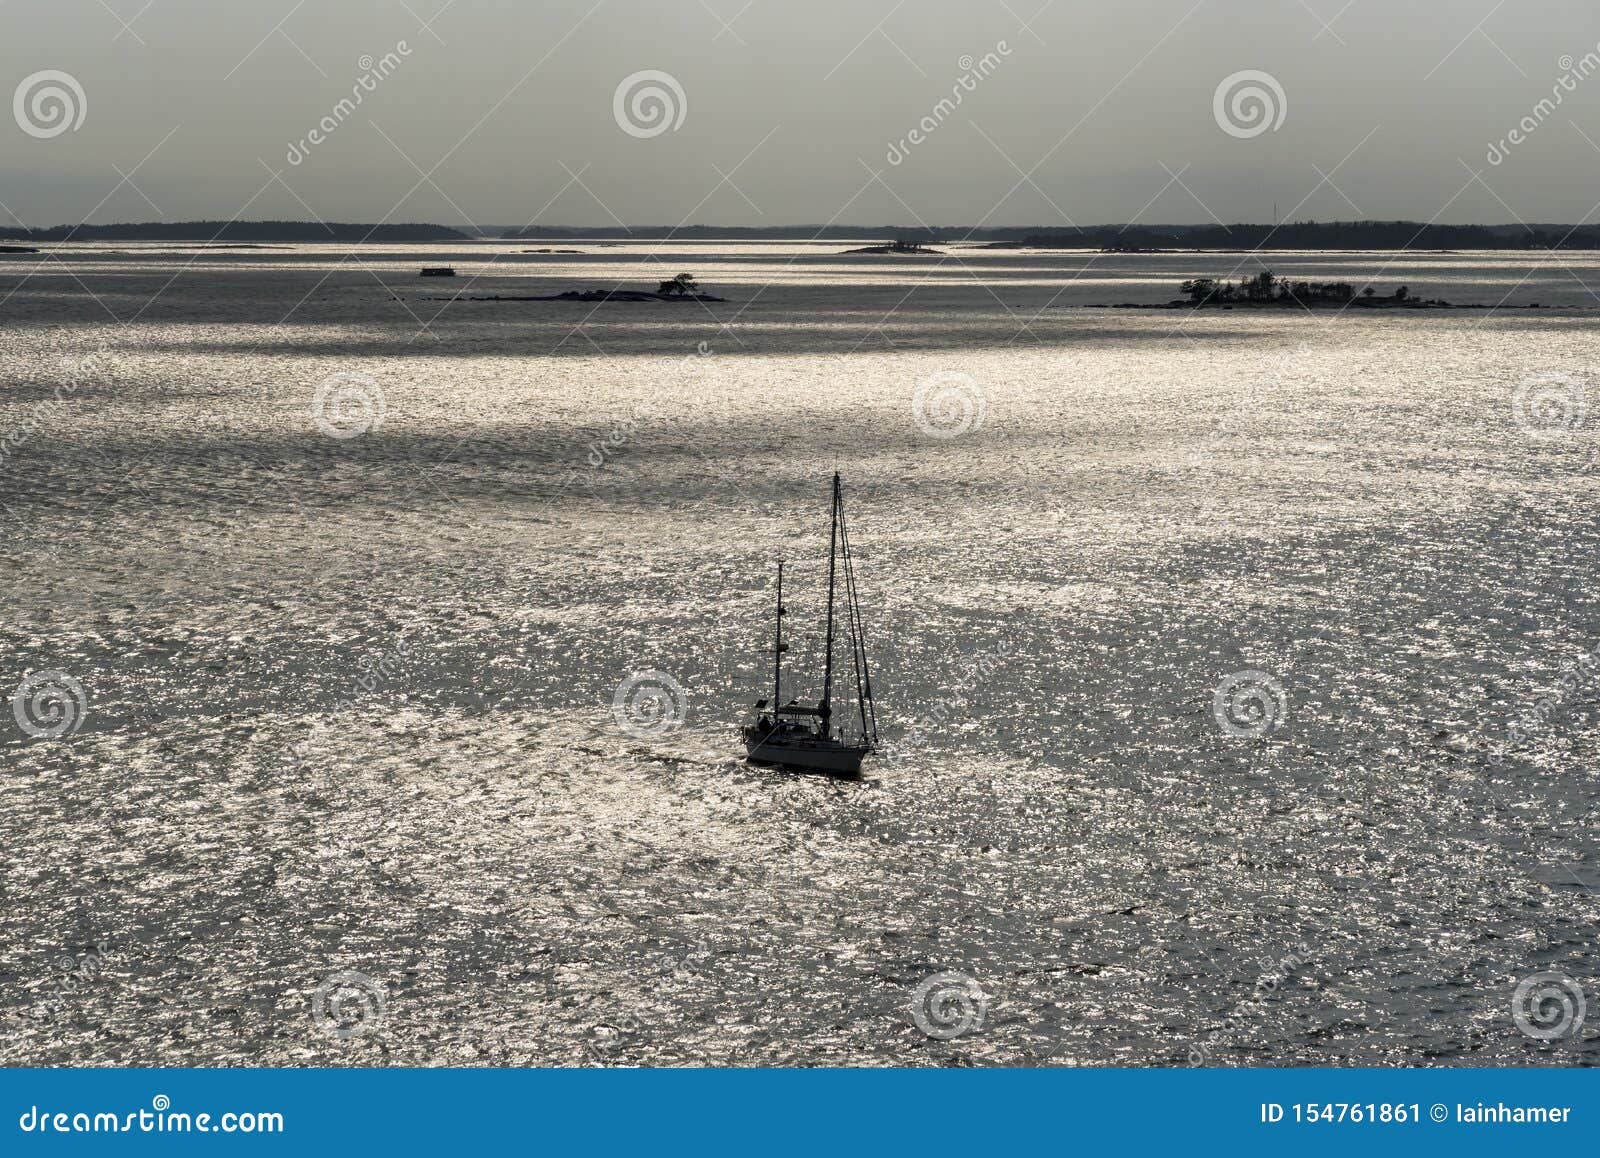 sailboat at sunset helsinki finland